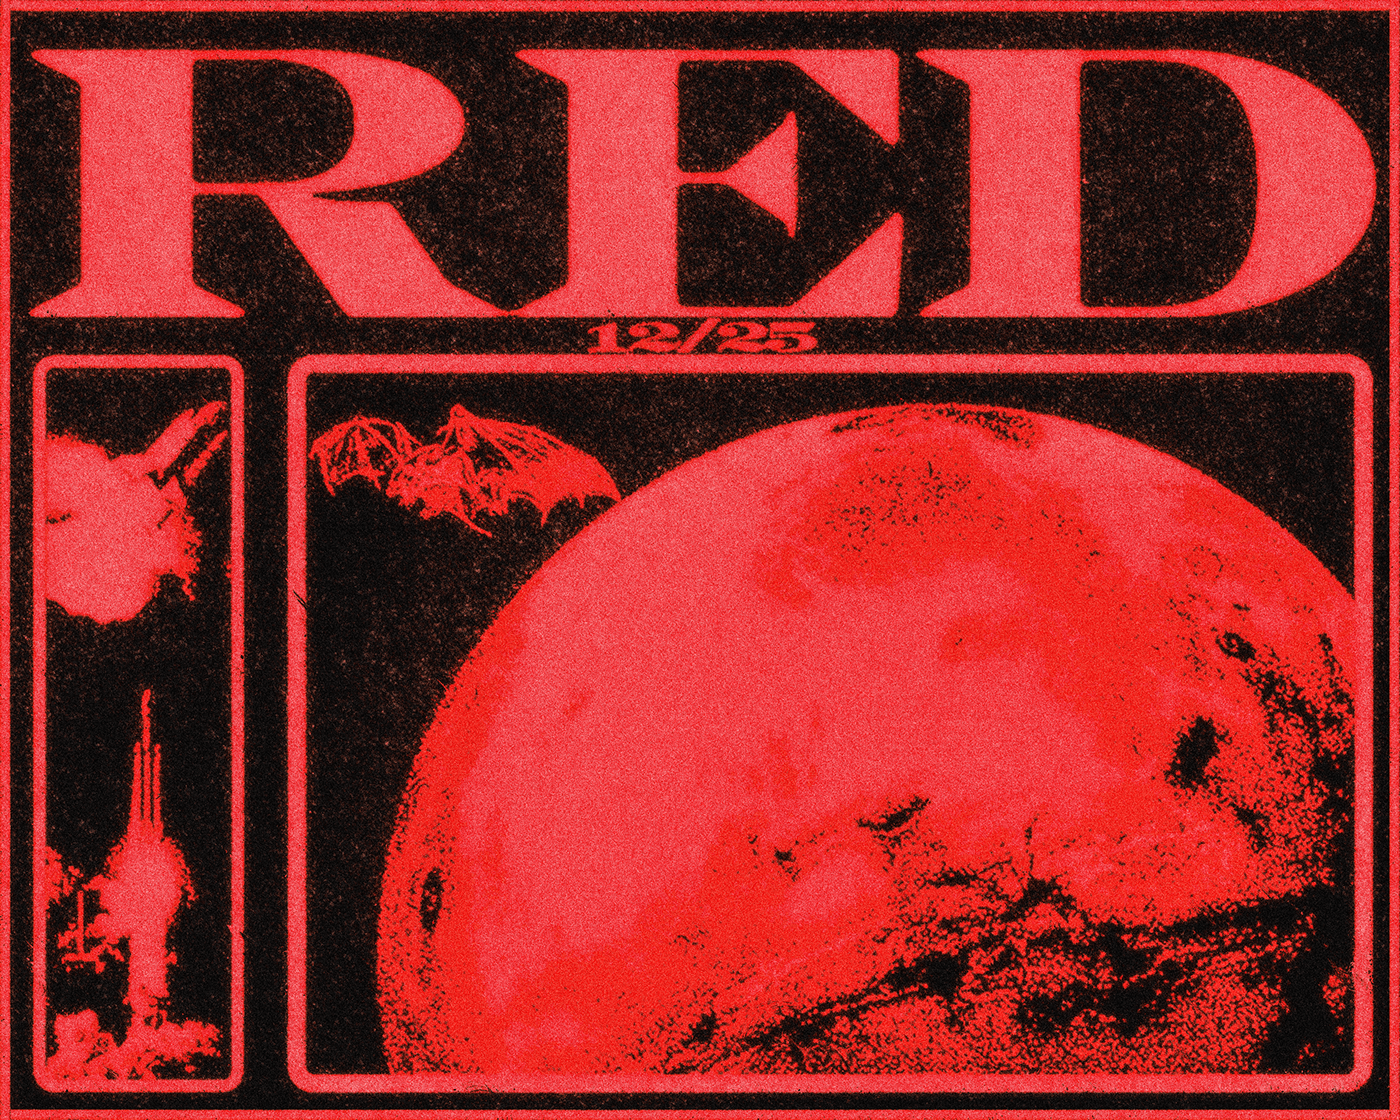 vintage red poster on Behance